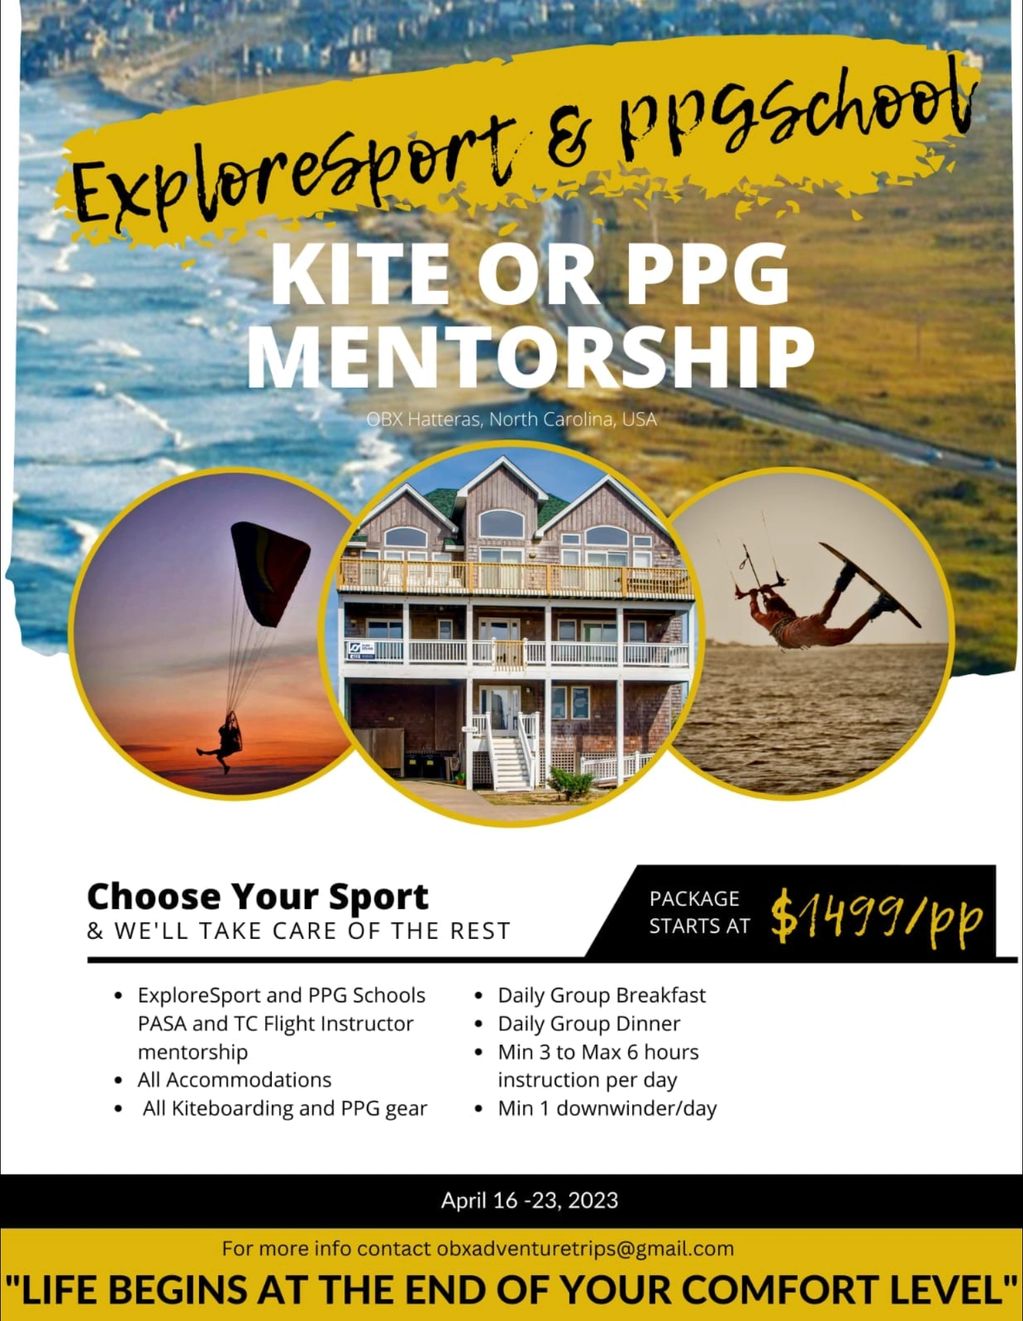 Kiteboarding or PPG Mentorship!

OBX Hatteras, North Carolina USA